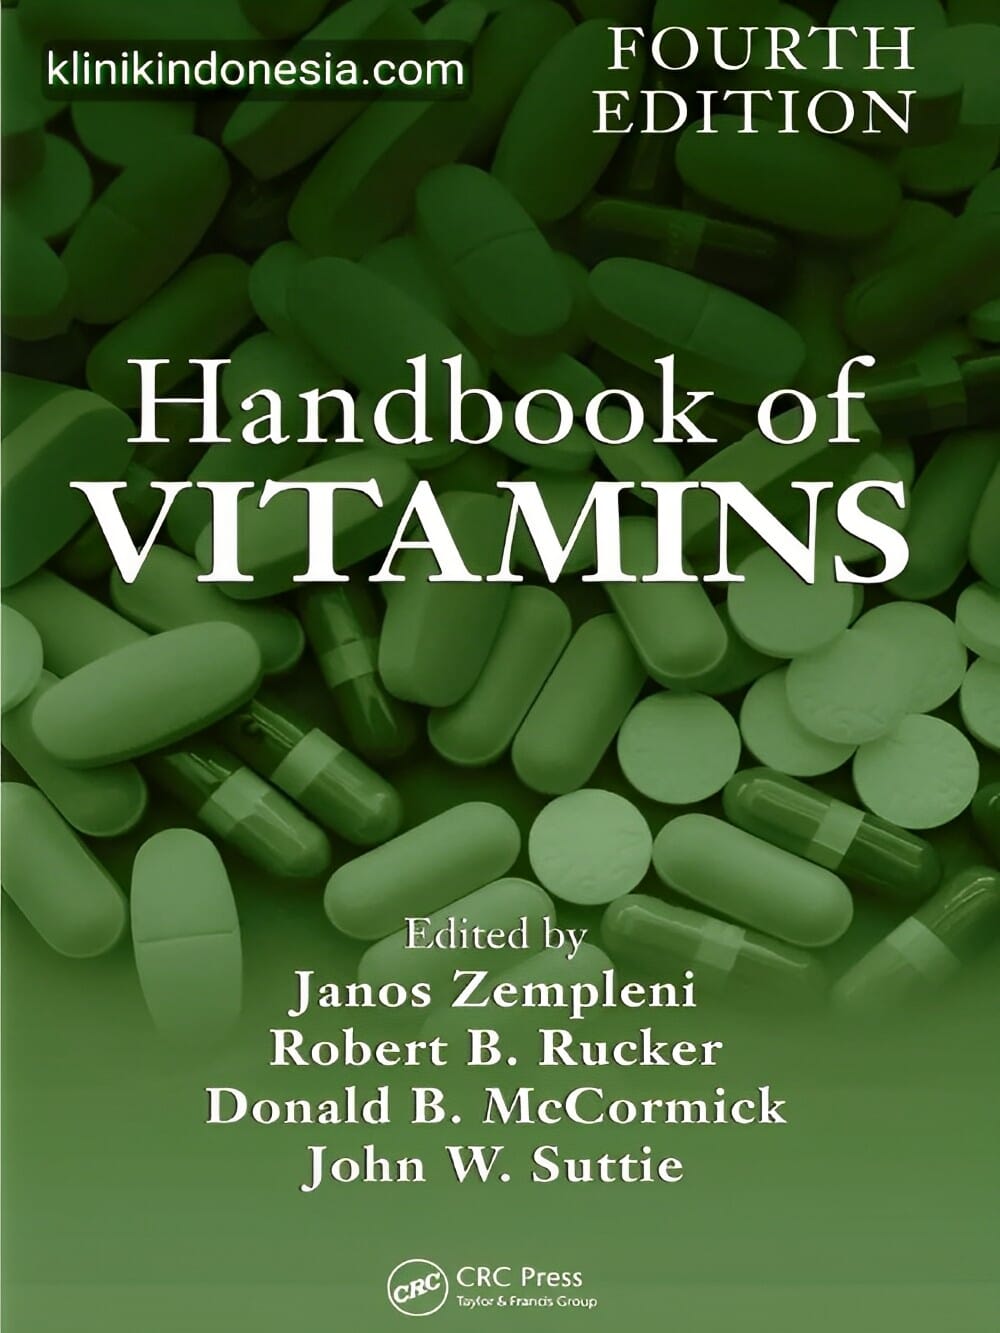 Gambar Handbook of Vitamins Fourth Edition